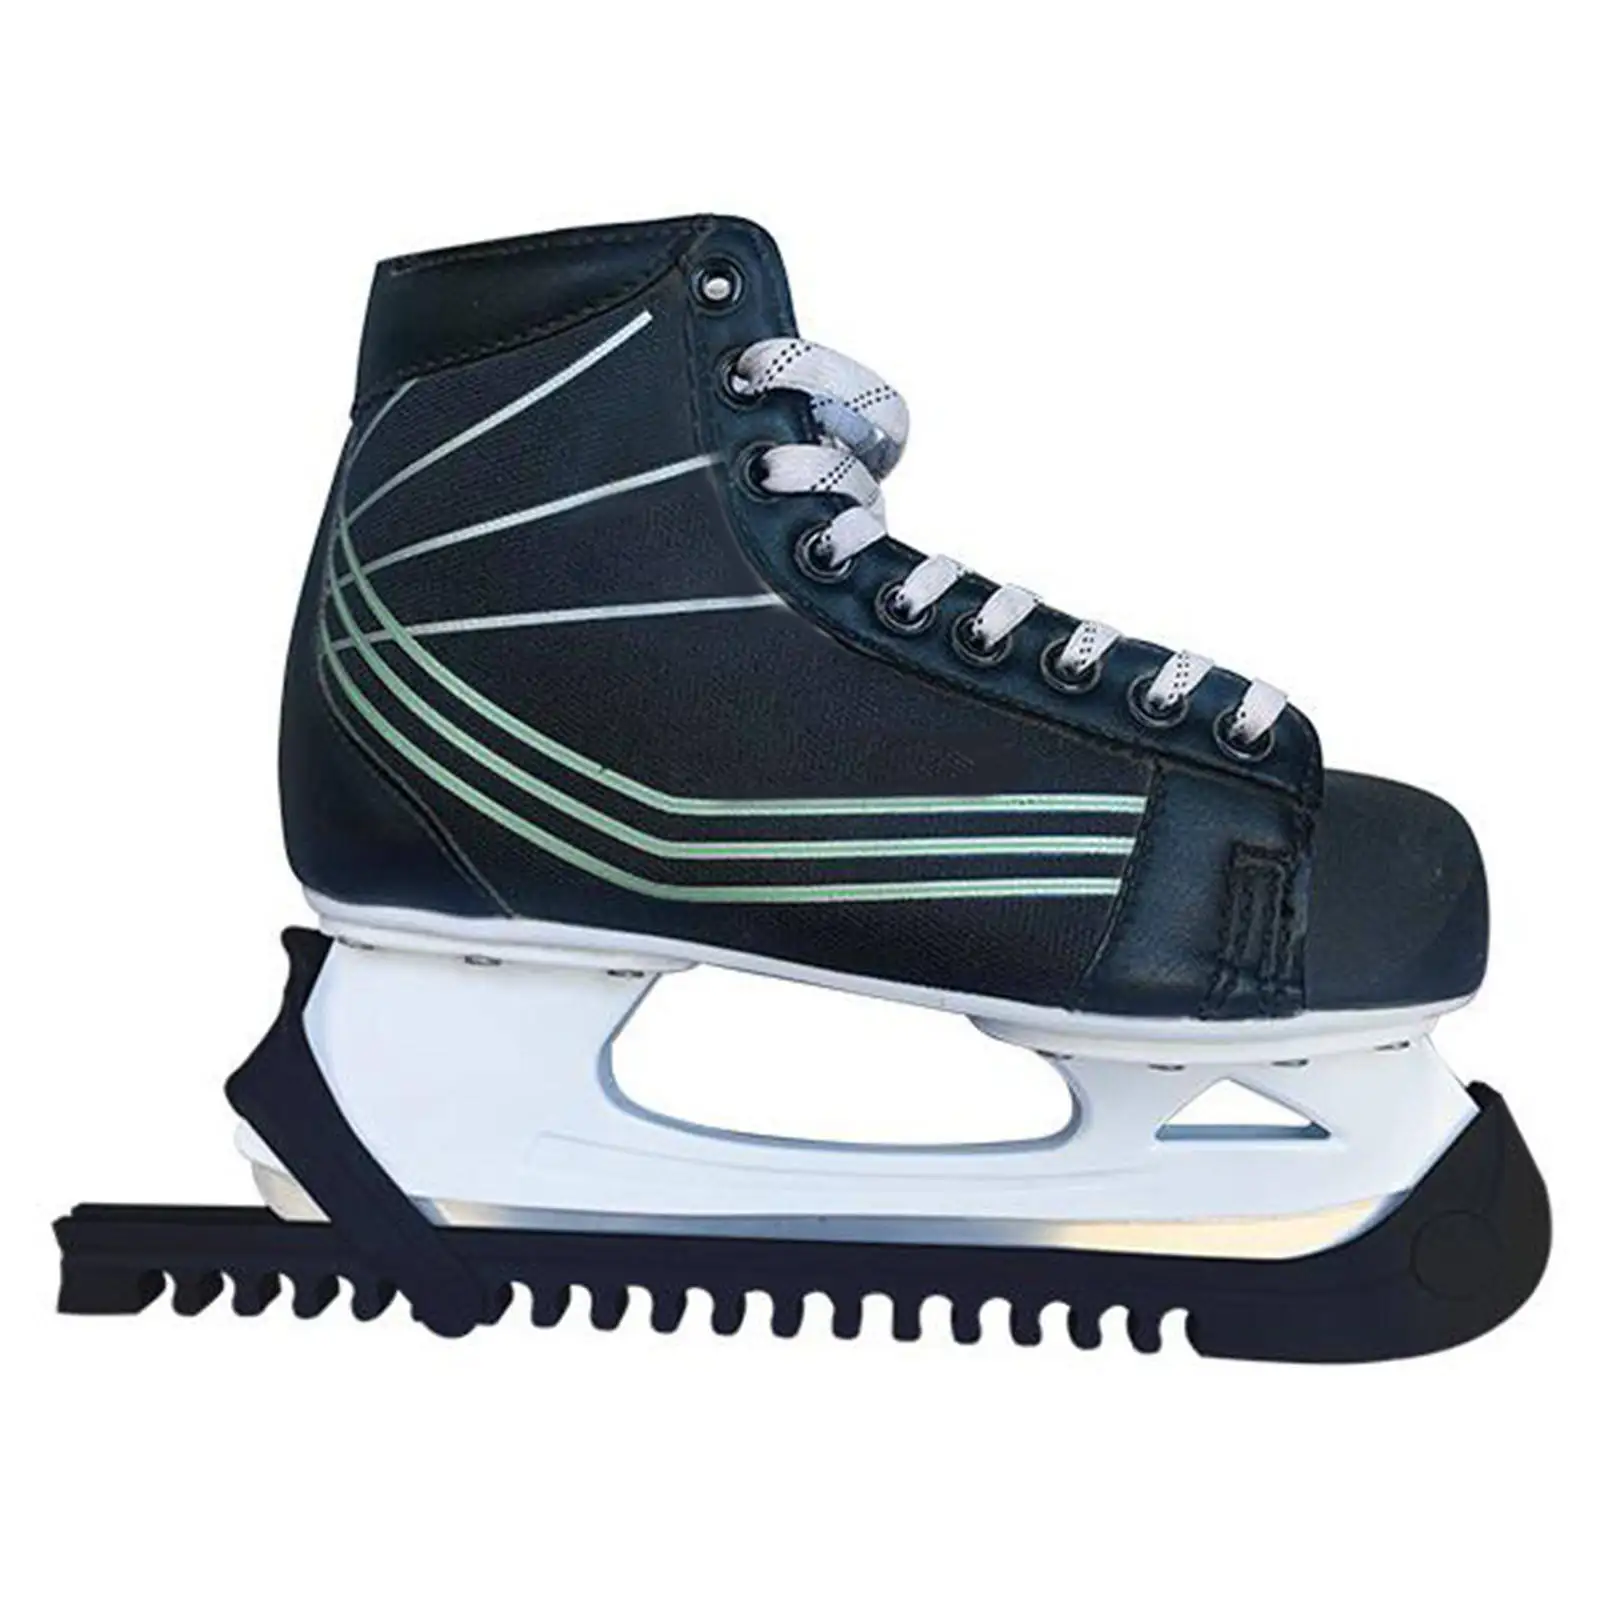 Adjustable Ice Hockey Figure Skate Blade Covers Ice Skate Blade Guards 